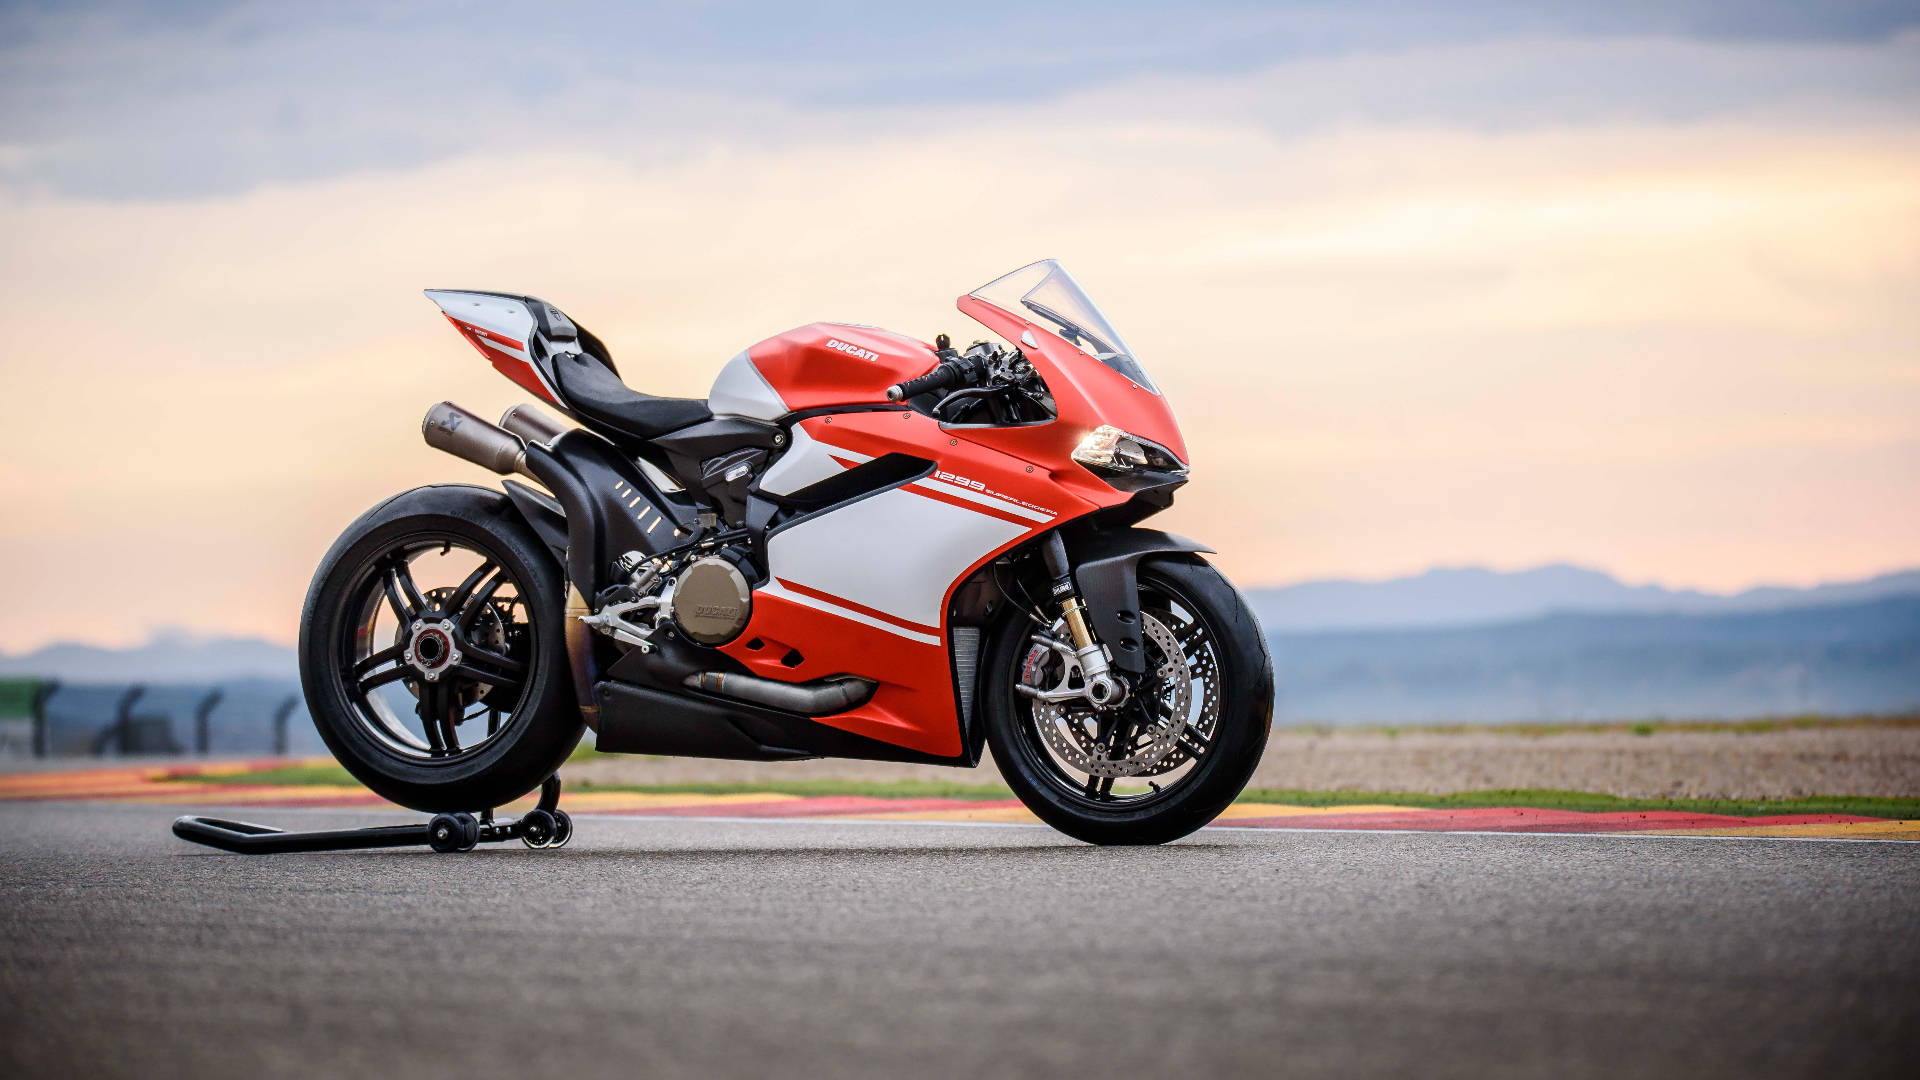 The Sporty And Sophisticated Ducati 1299 Superleggera